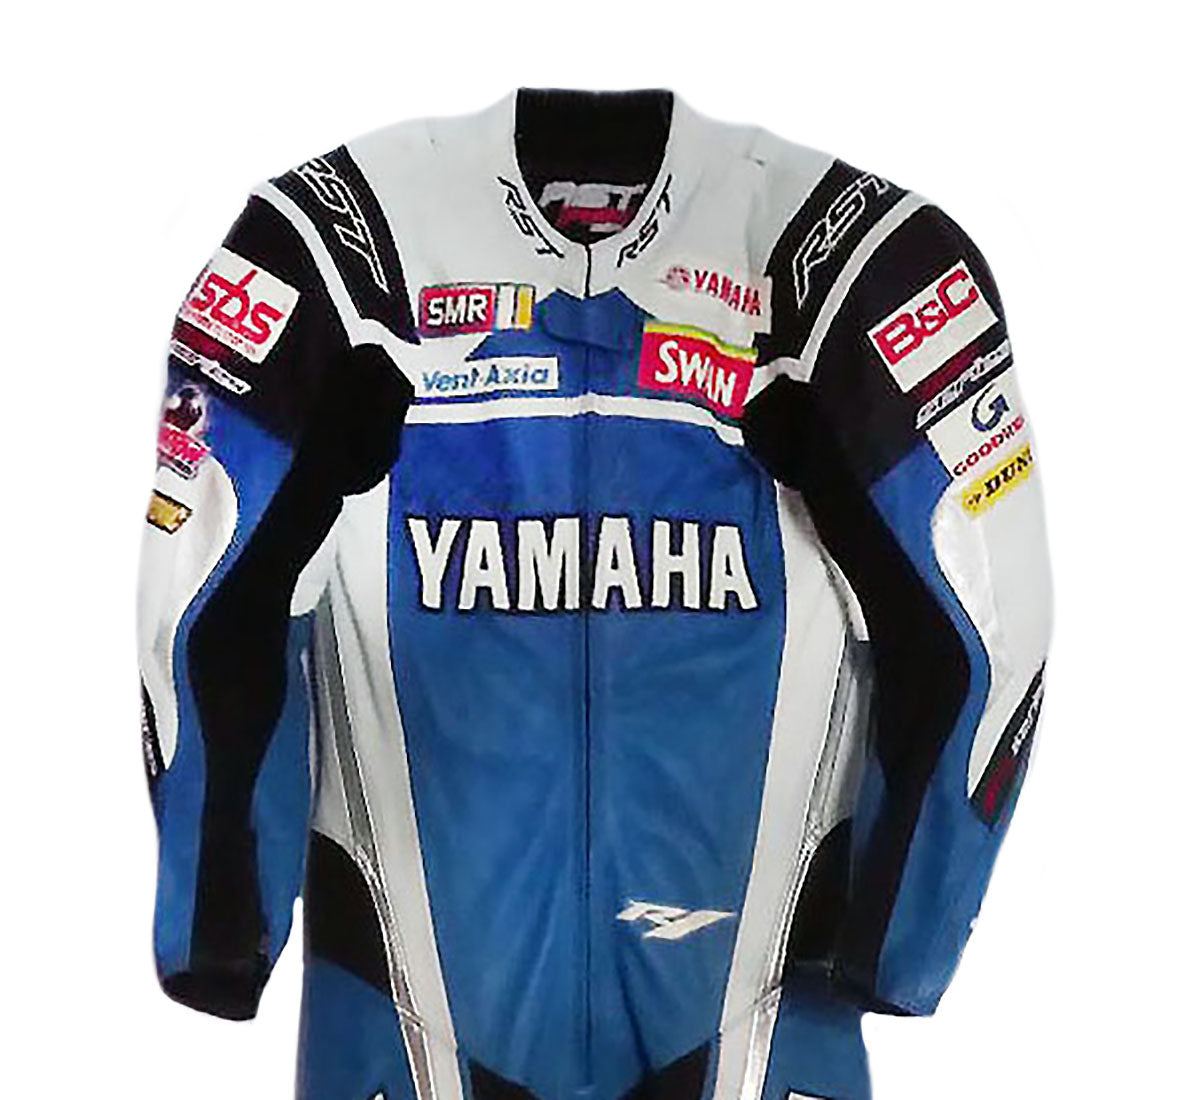 2011 Ian Hutchinson Signed Isle of Man TT Used Yamaha Leathers